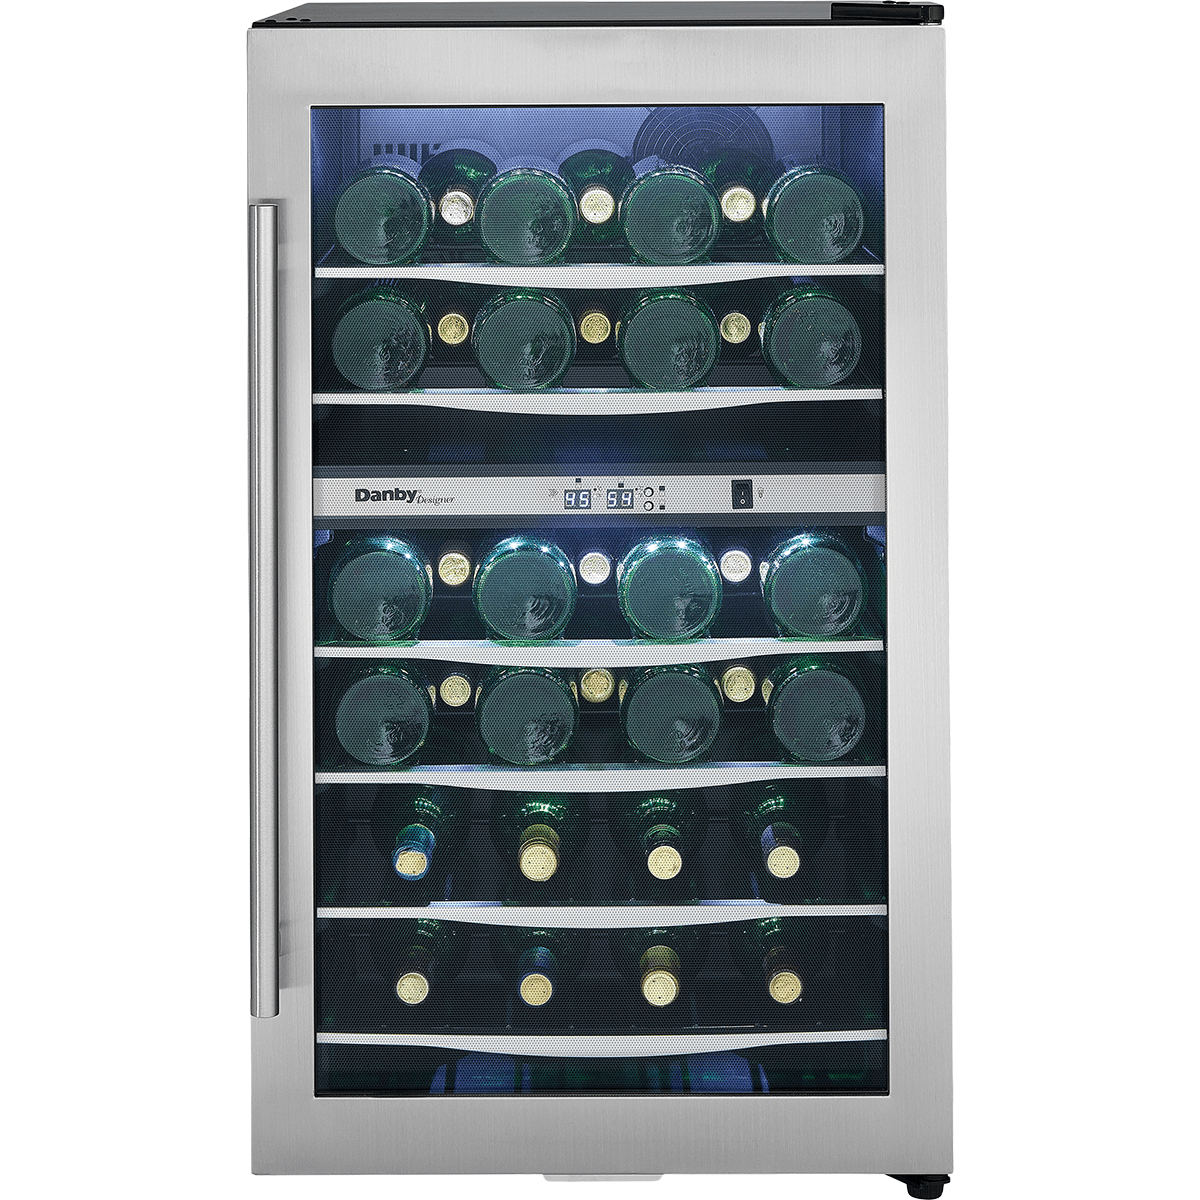 Danby Designer 38 Bottle Dual Zone Wine Cooler (DWC040A3BSSDD)